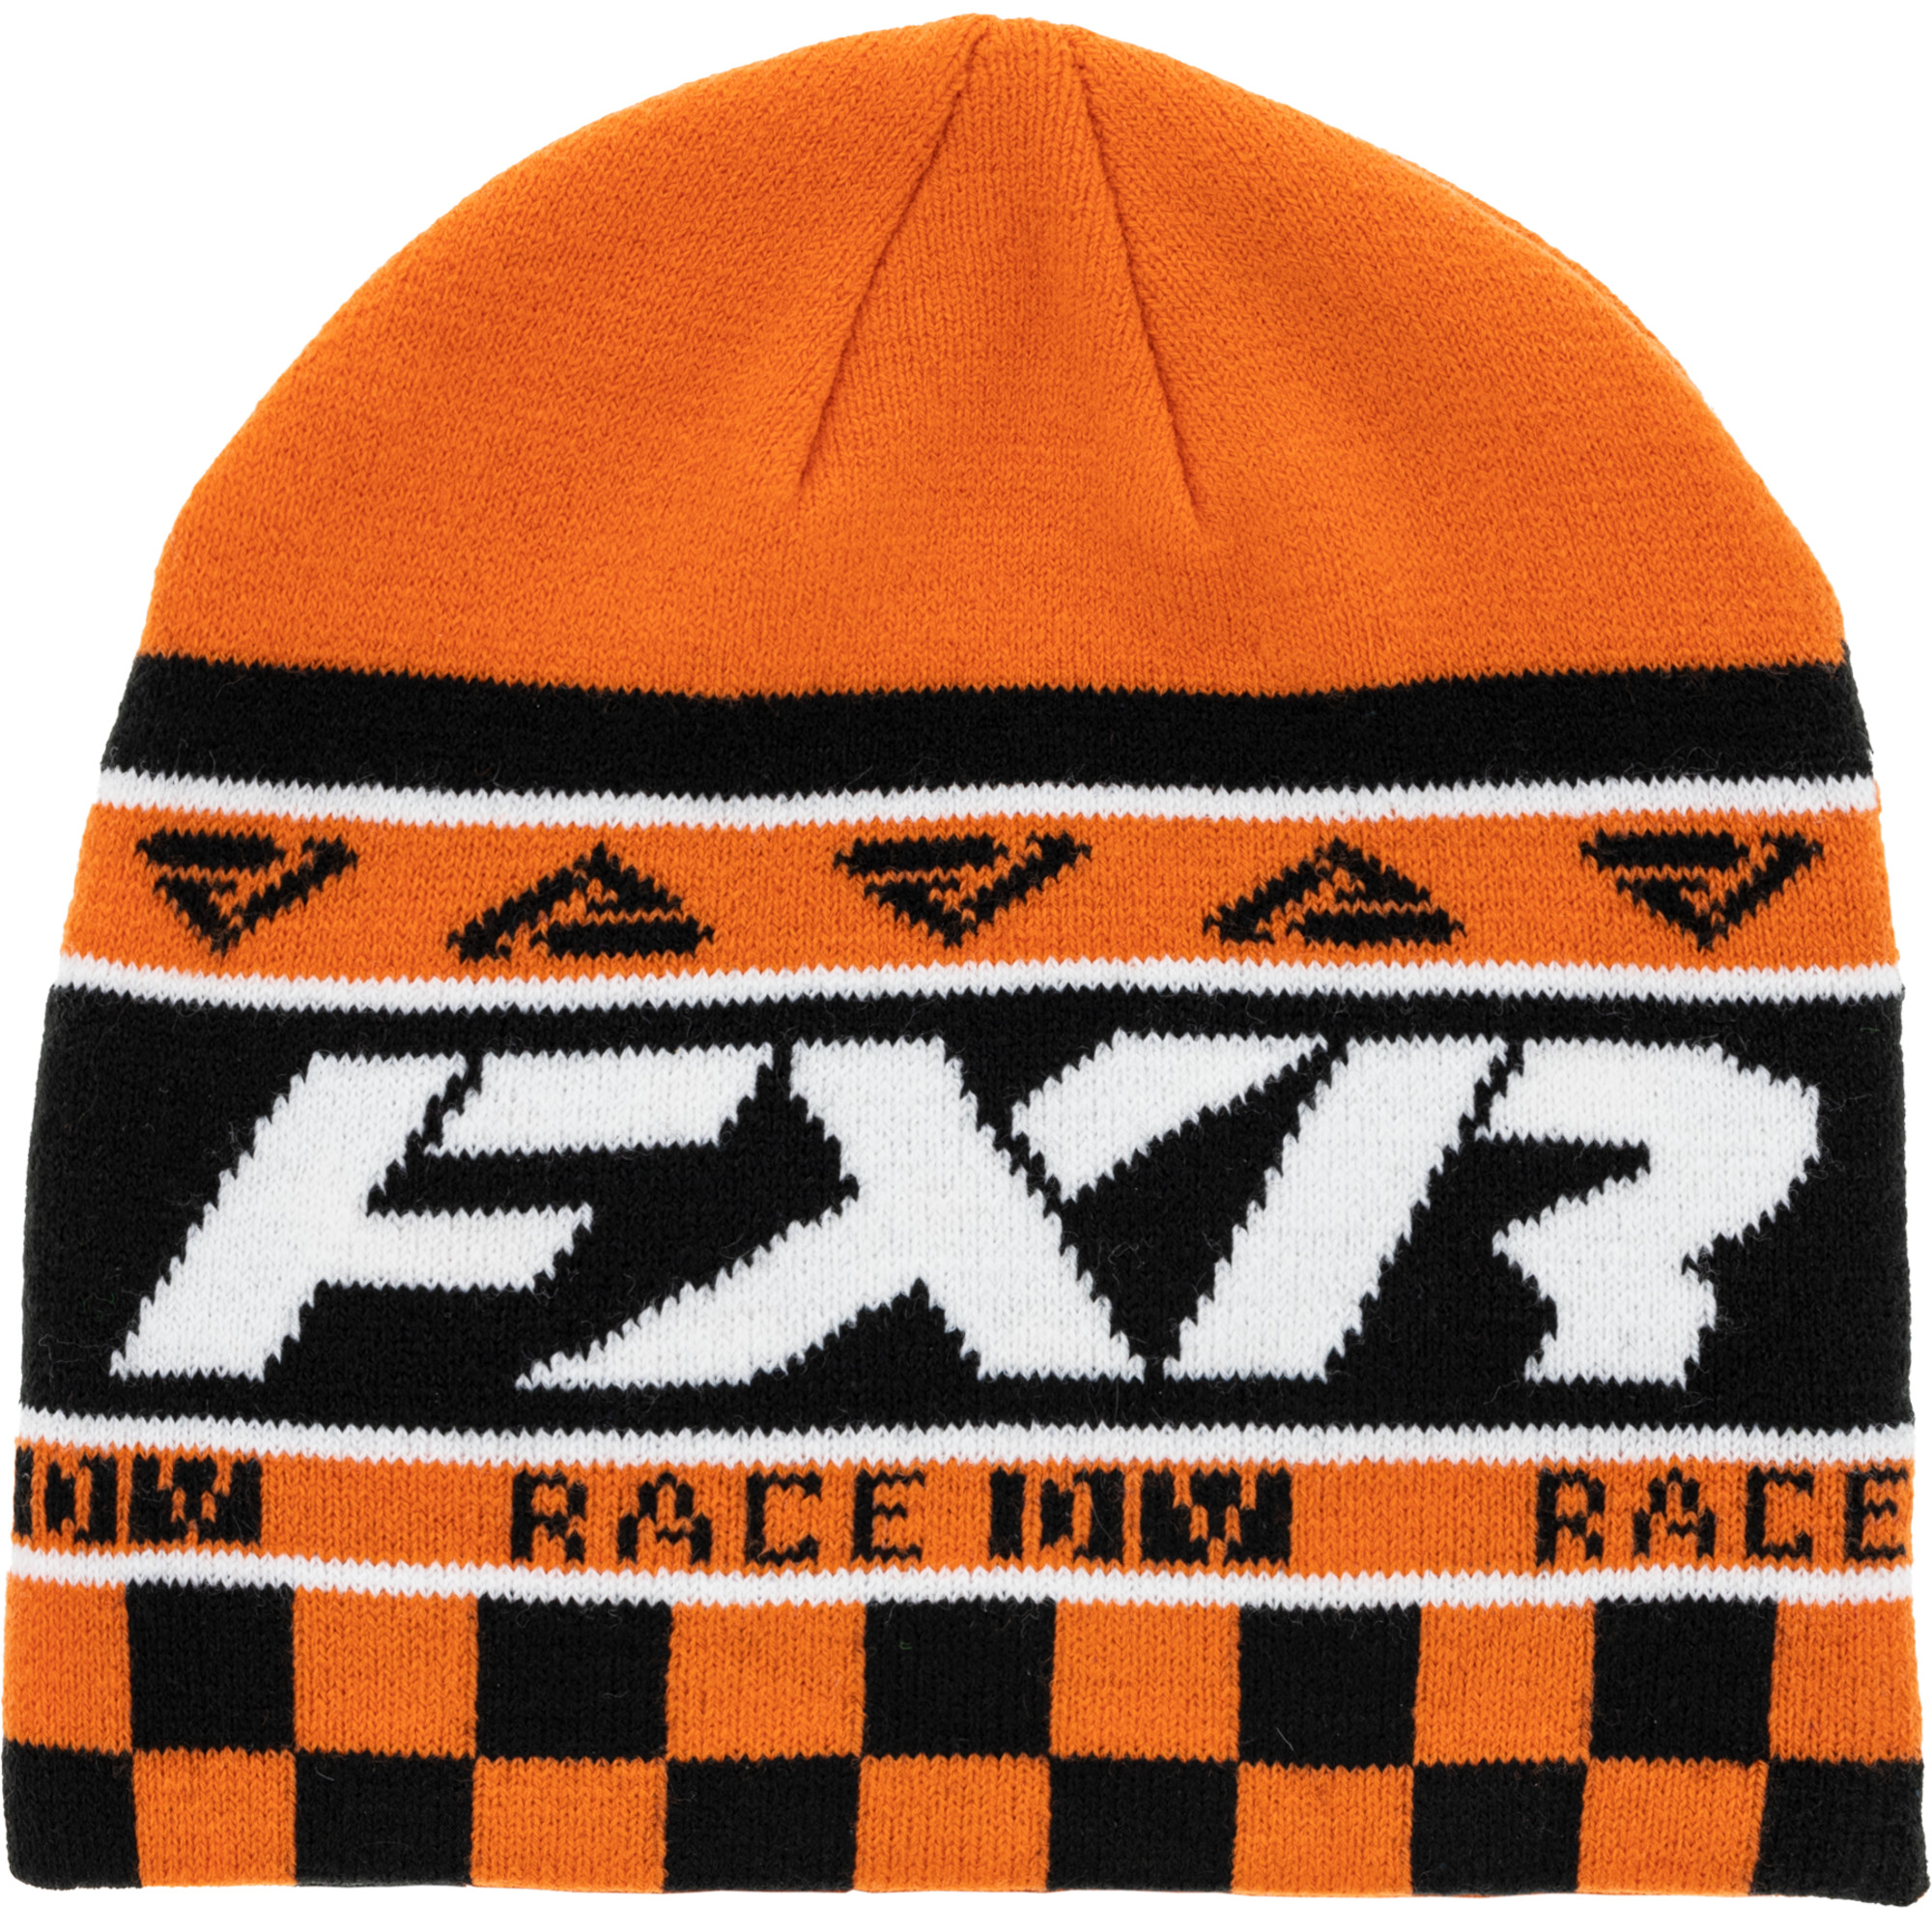 fxr racing beanie headwear adult race division